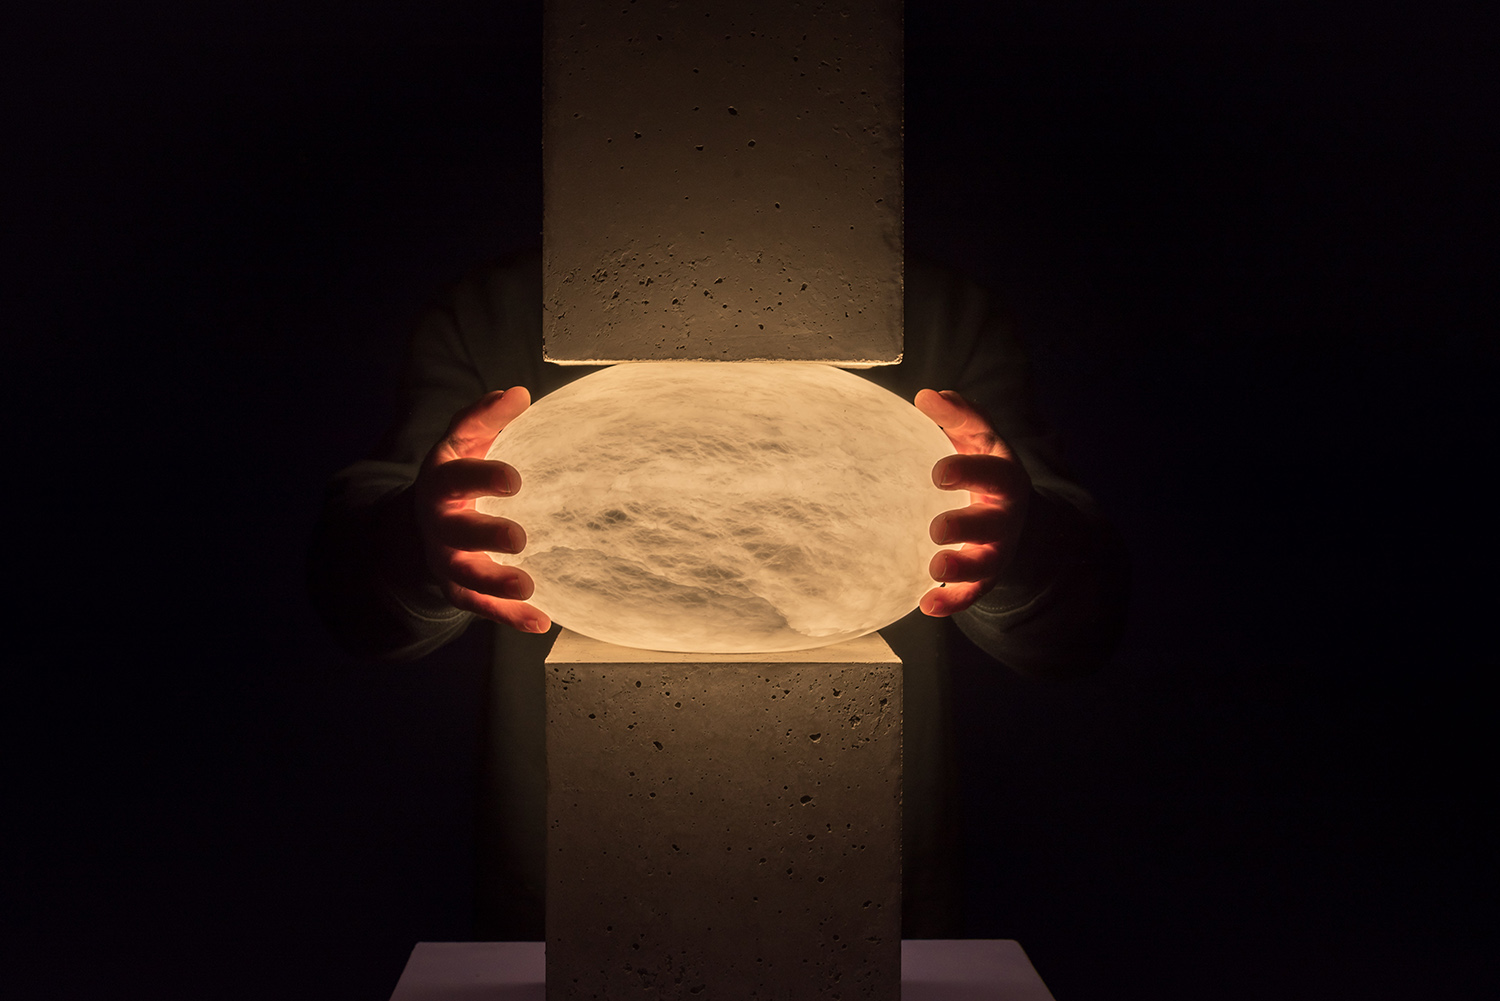 Aqua Fossil Gravity - Alabaster and Concrete light